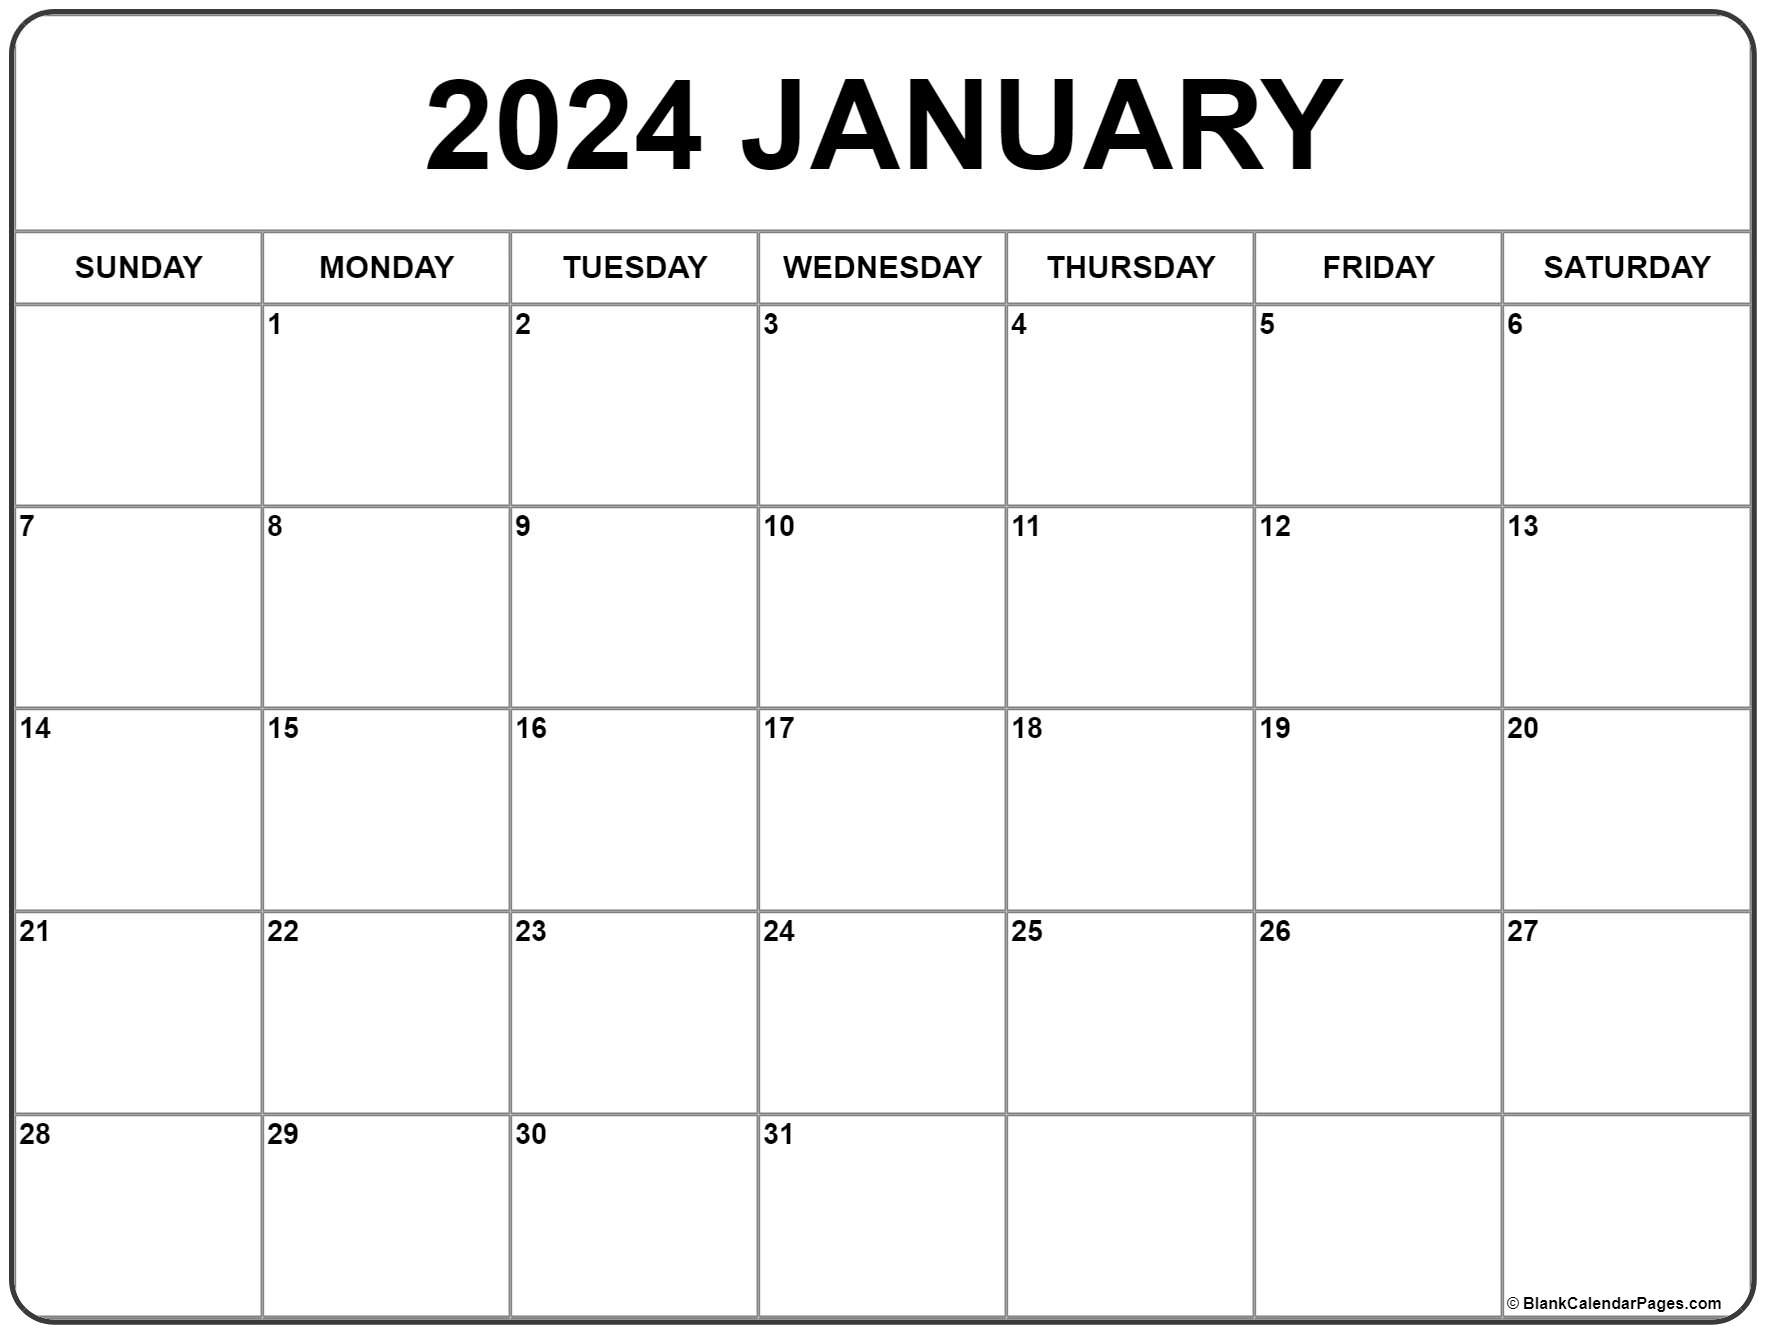 January 2024 Calendar | Free Printable Calendar for Monthly Calendar January 2024 Printable